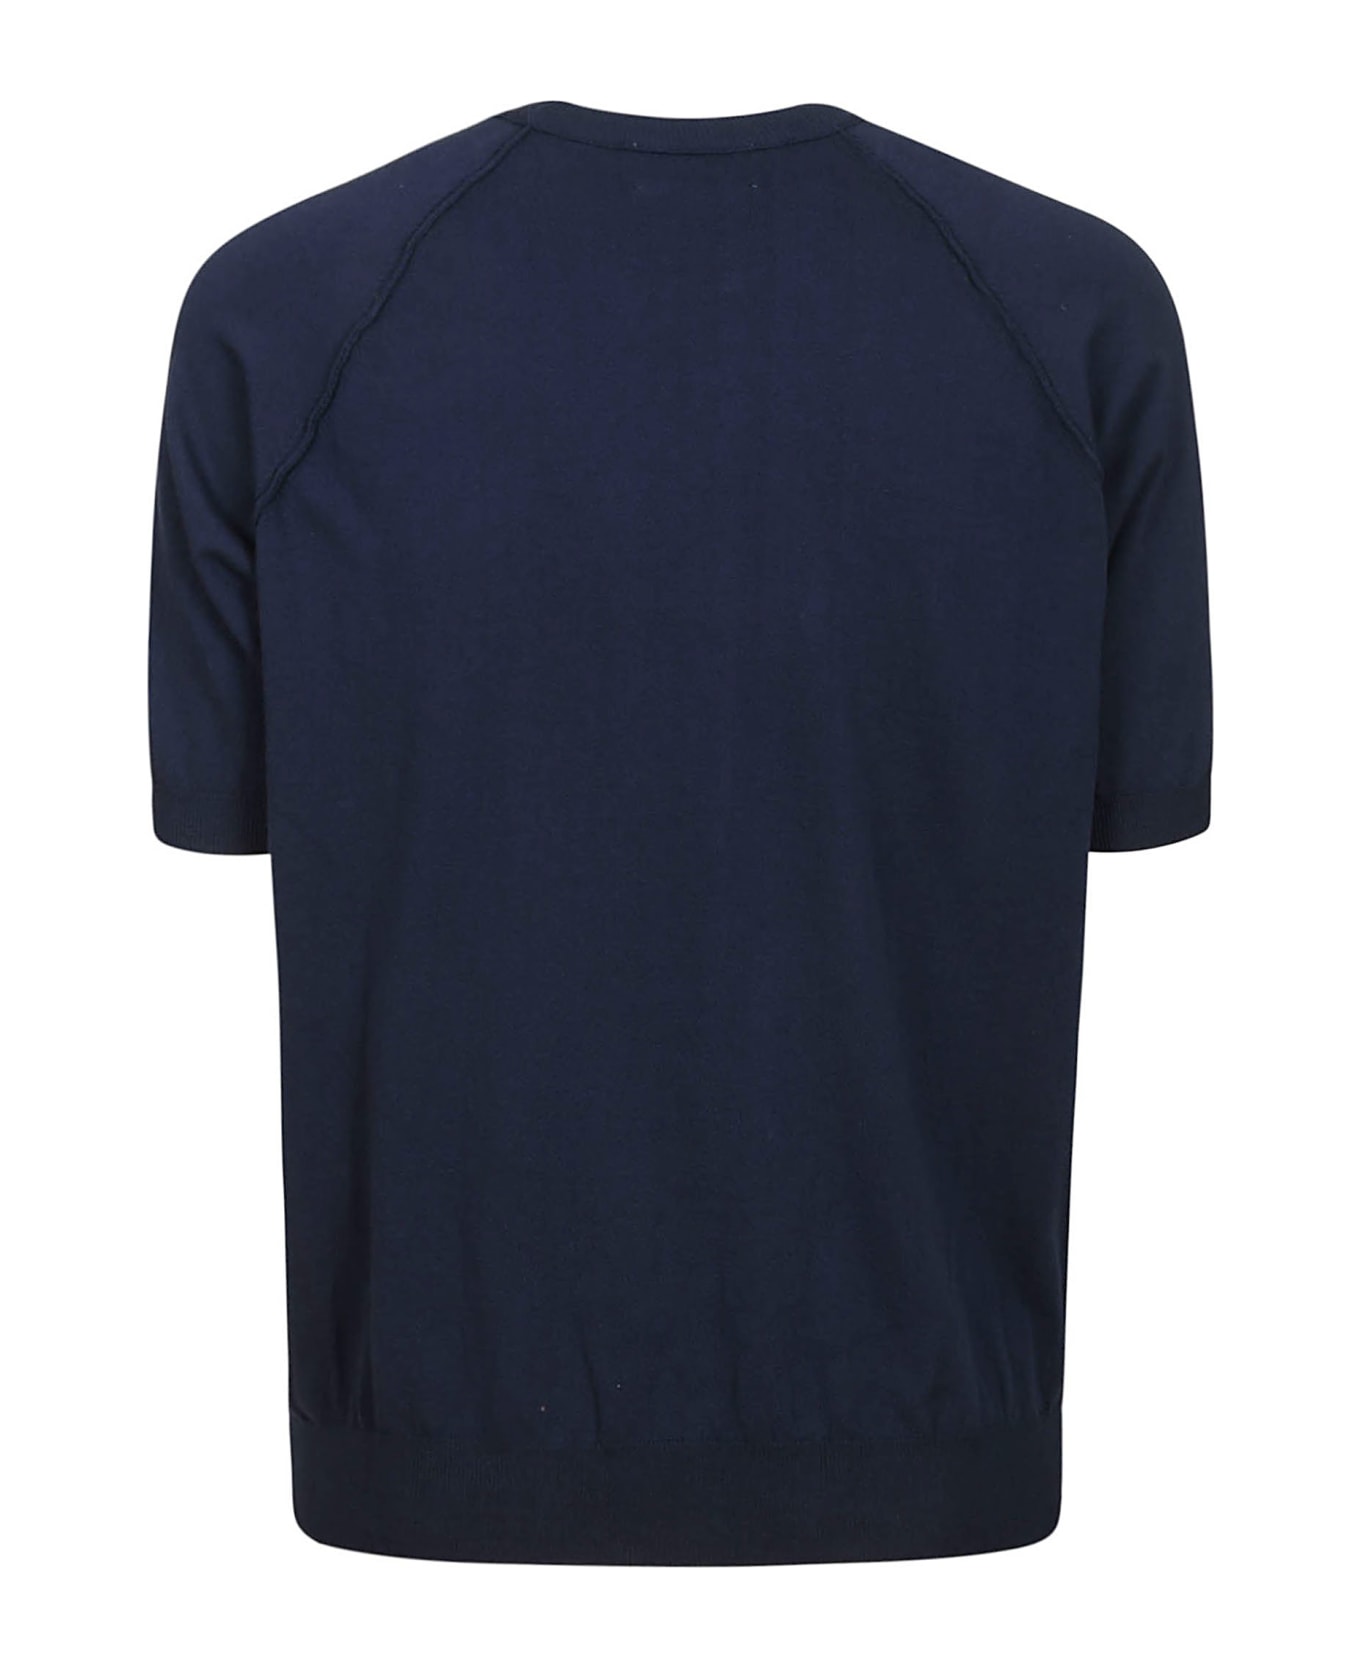 Atomo Factory T-shirt Cotone Crepe - Blue Dark